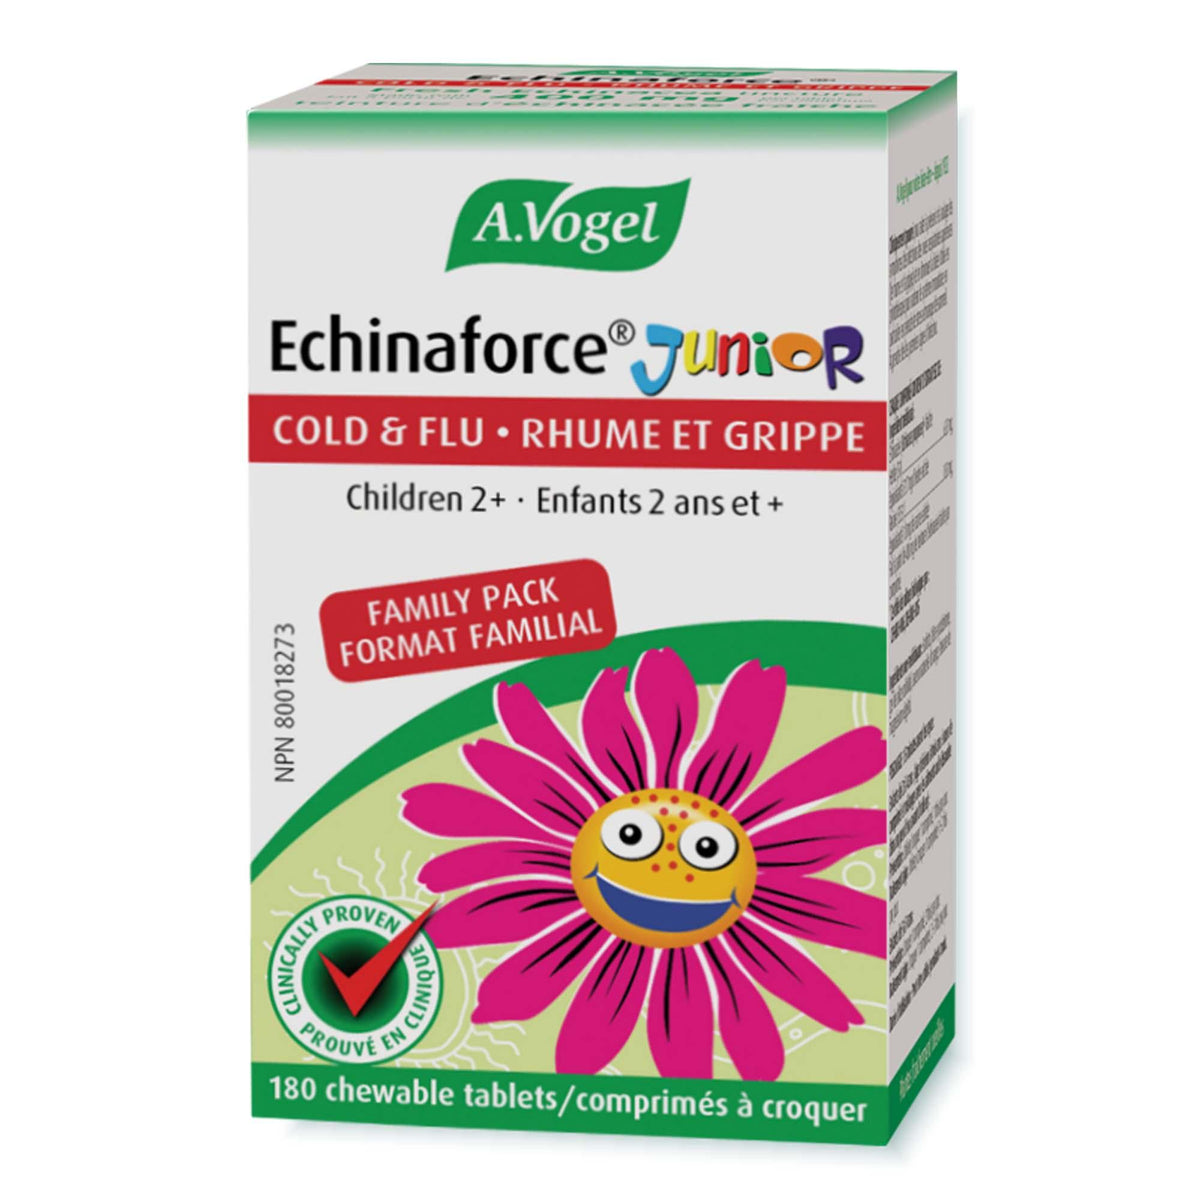 A.Vogel Echinaforce Junior 180 Chewable Tabs Cough, Cold & Flu at Village Vitamin Store